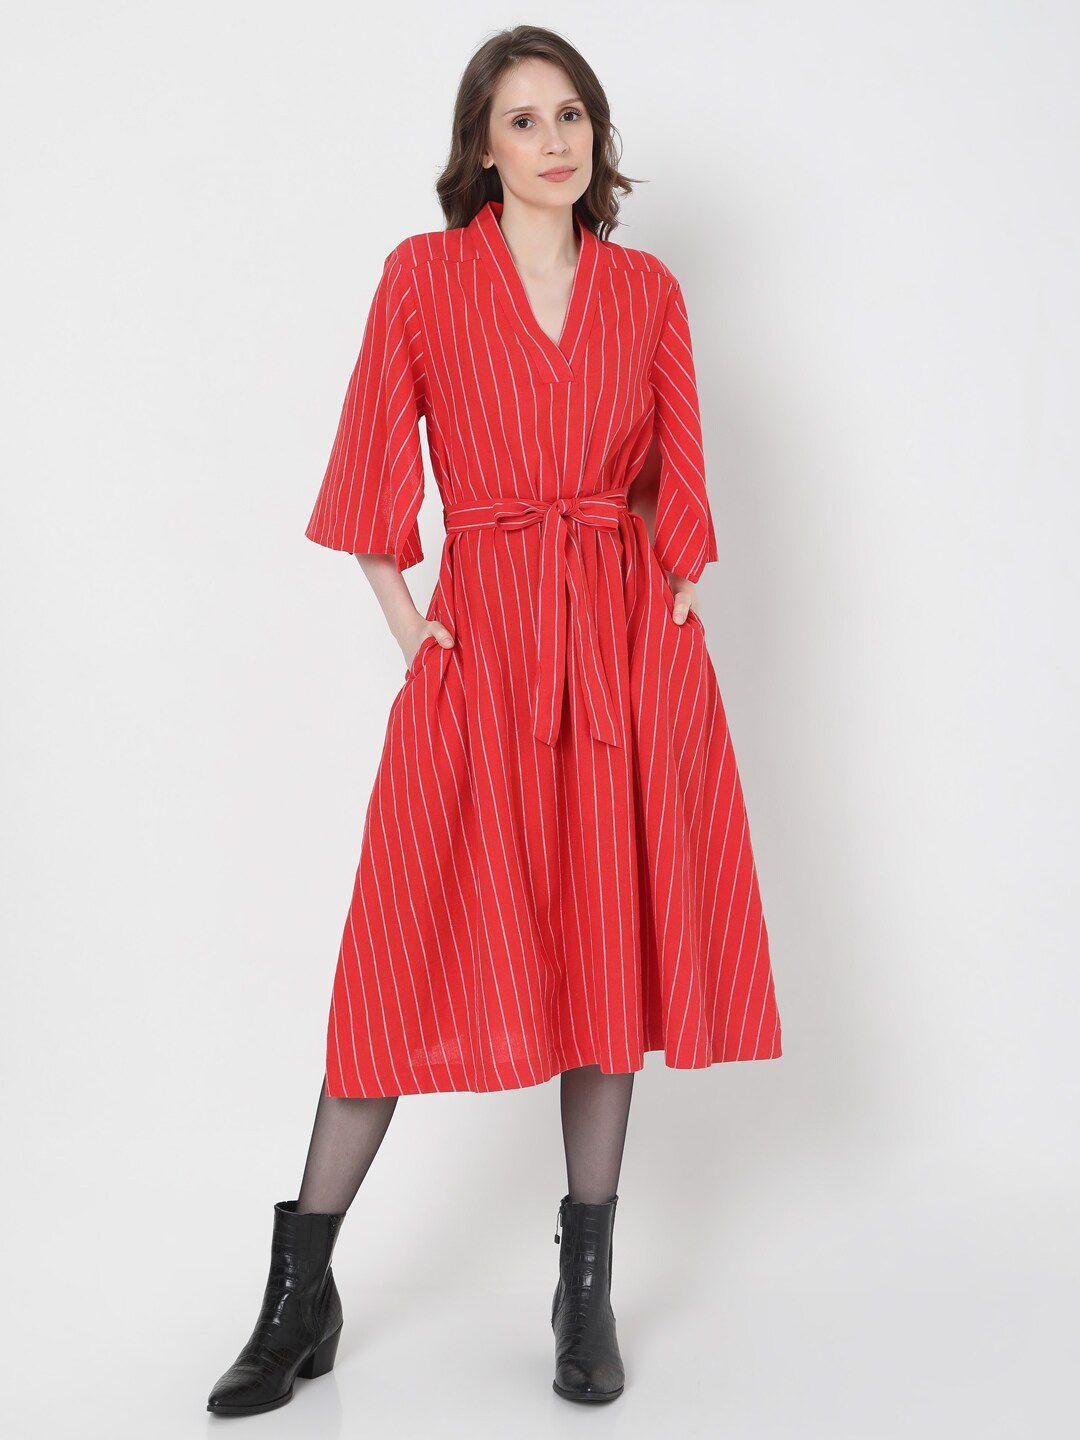 vero moda red striped midi dress with slit sleeves